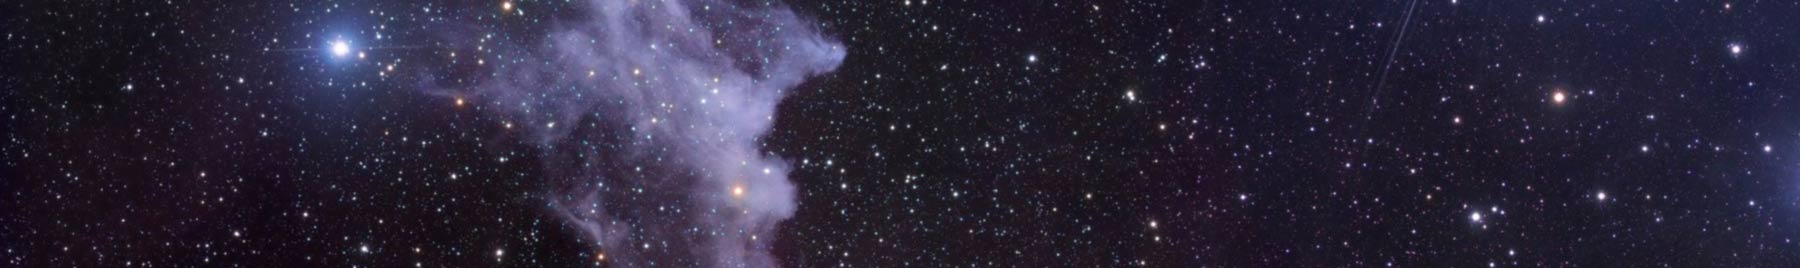 The Reflection Nebula